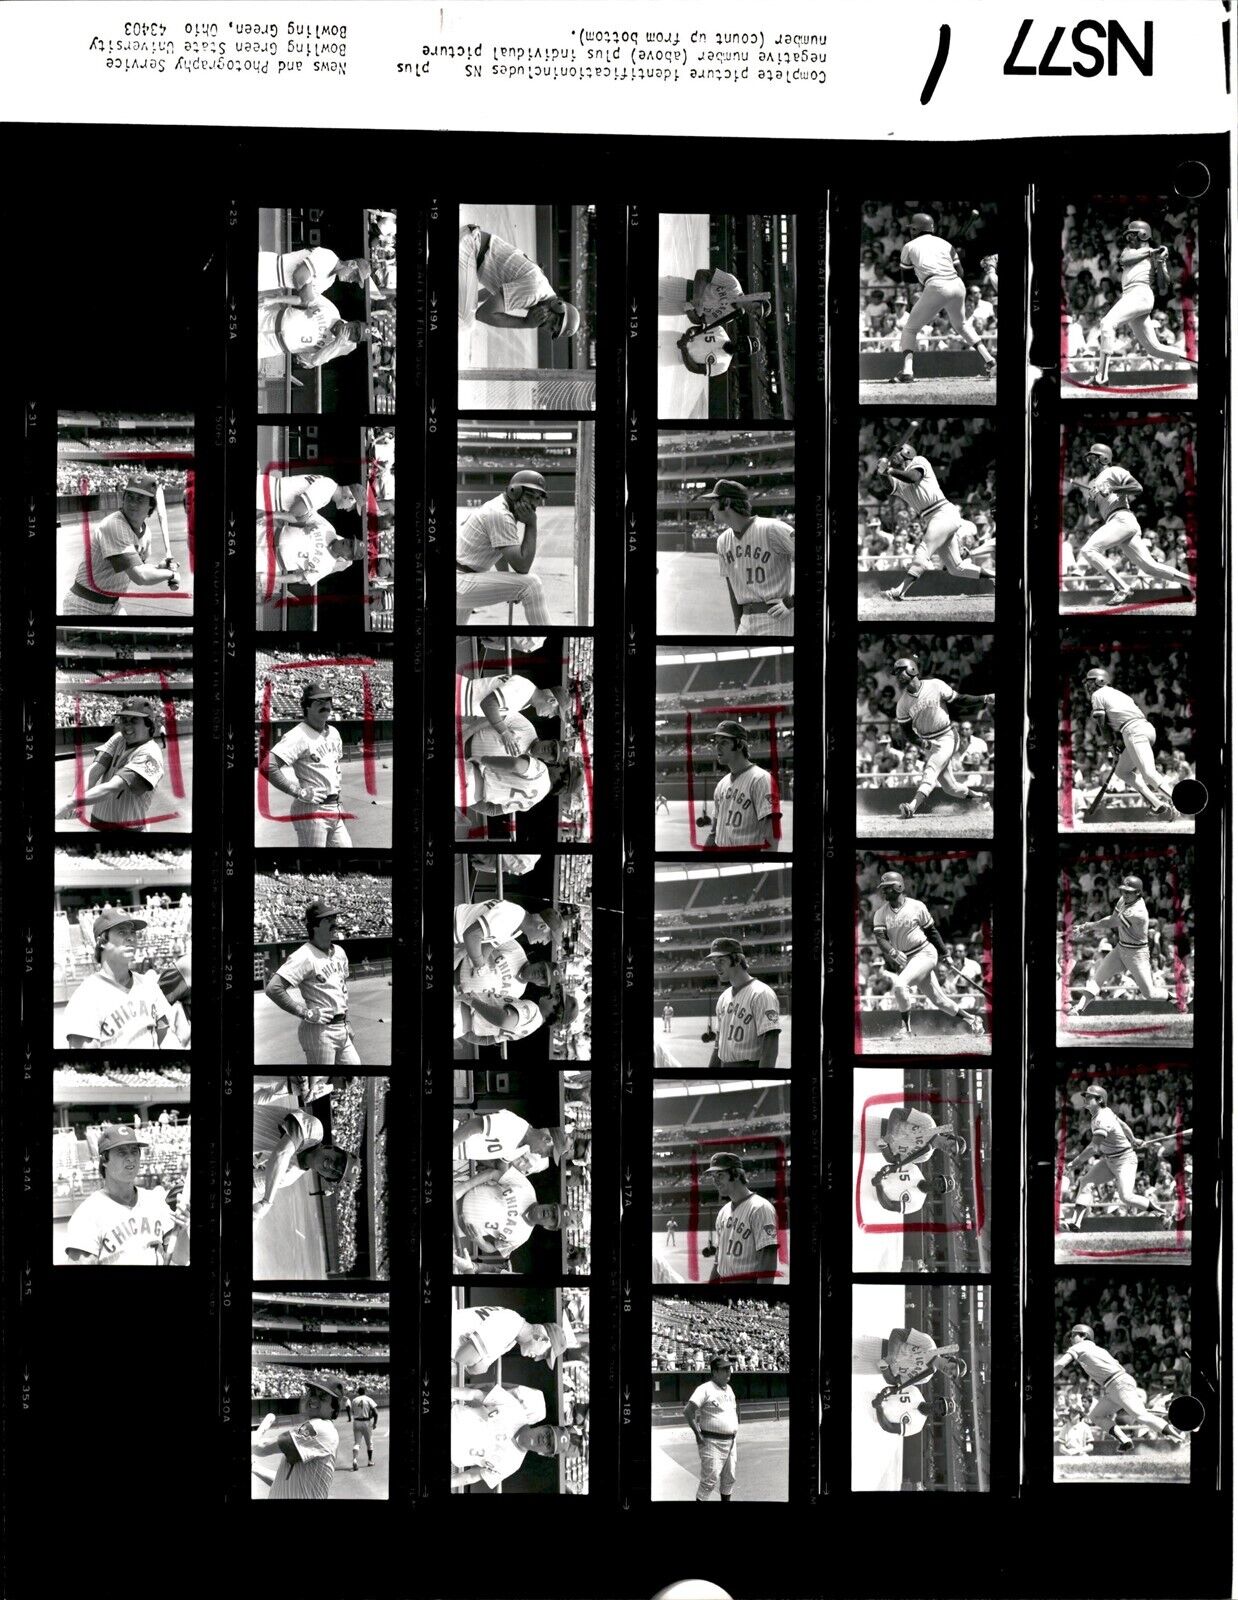 LD345 '78 Orig Contact Sheet Photo DAVE KINGMAN BOBBY MURCER CHICAGO CUBS ROYALS